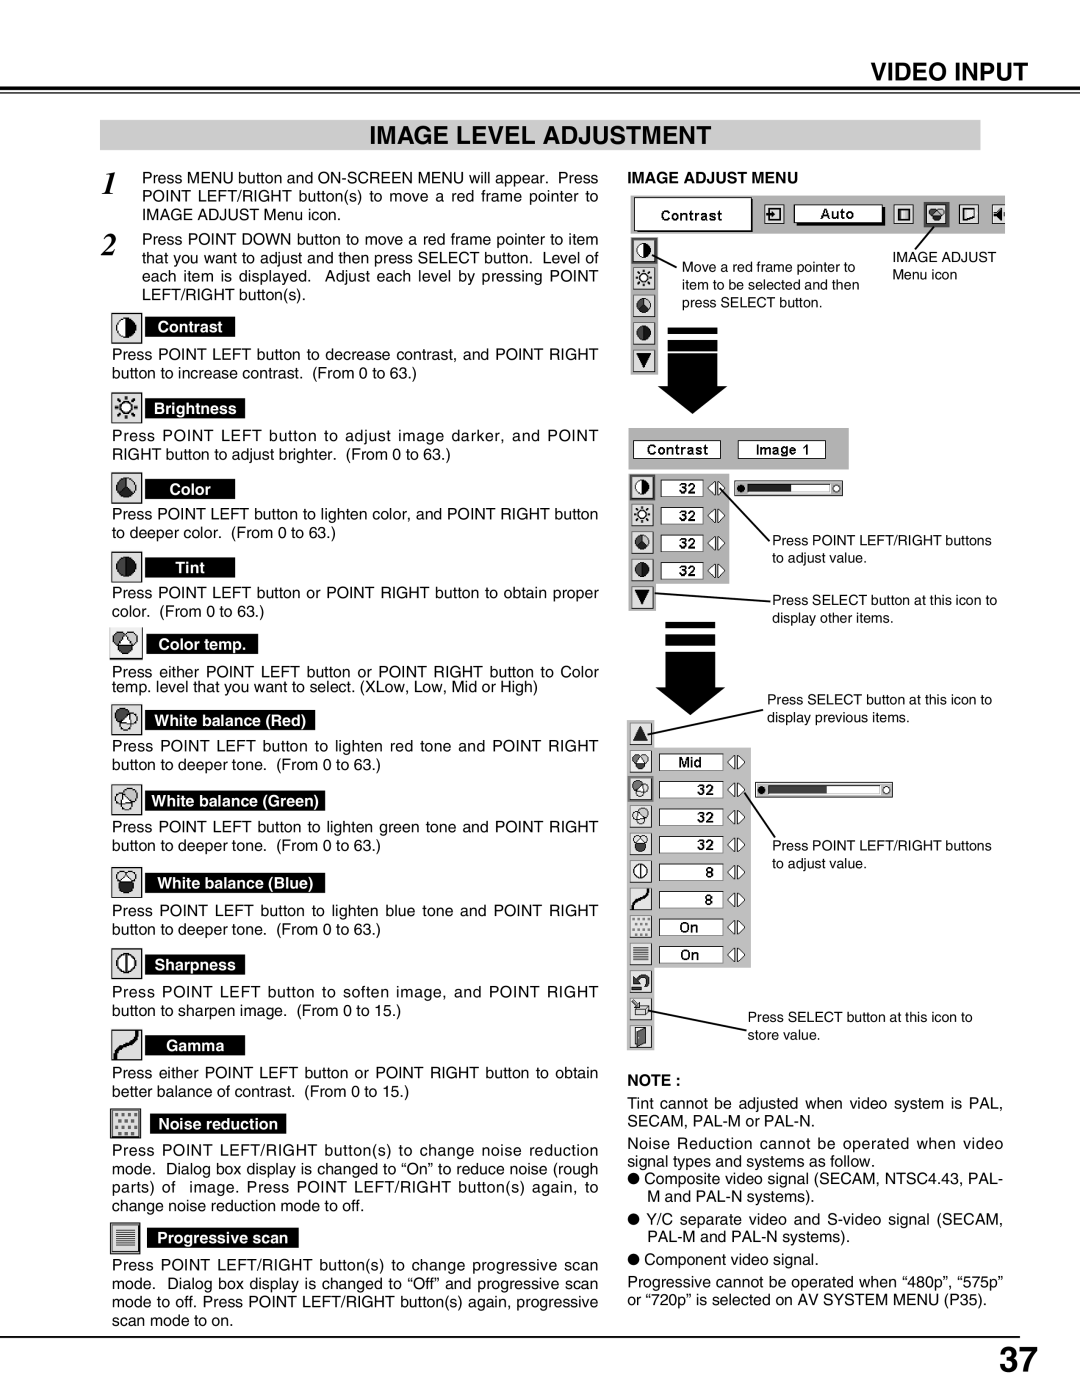 Eiki LC-SX4LA instruction manual Video Input Image Level Adjustment, Image Adjust Menu 